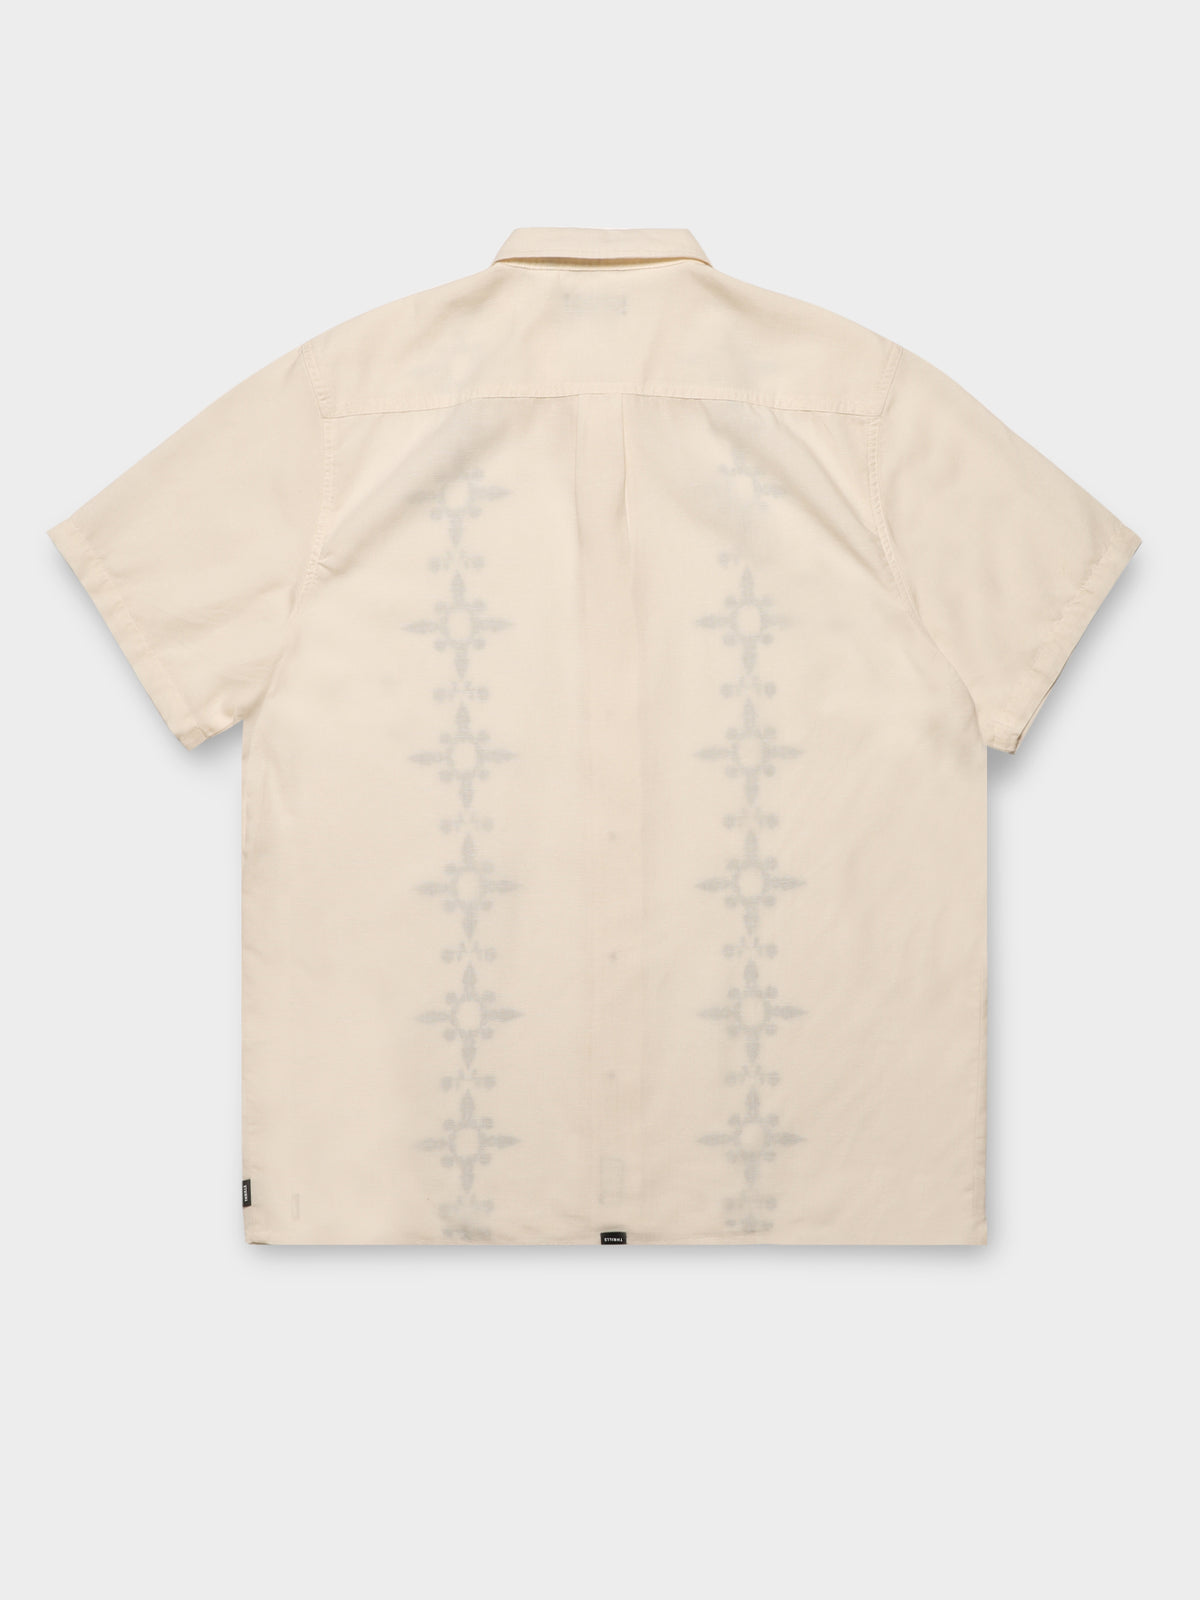 Hippie Pit Short Sleeve Shirt in Heritage White